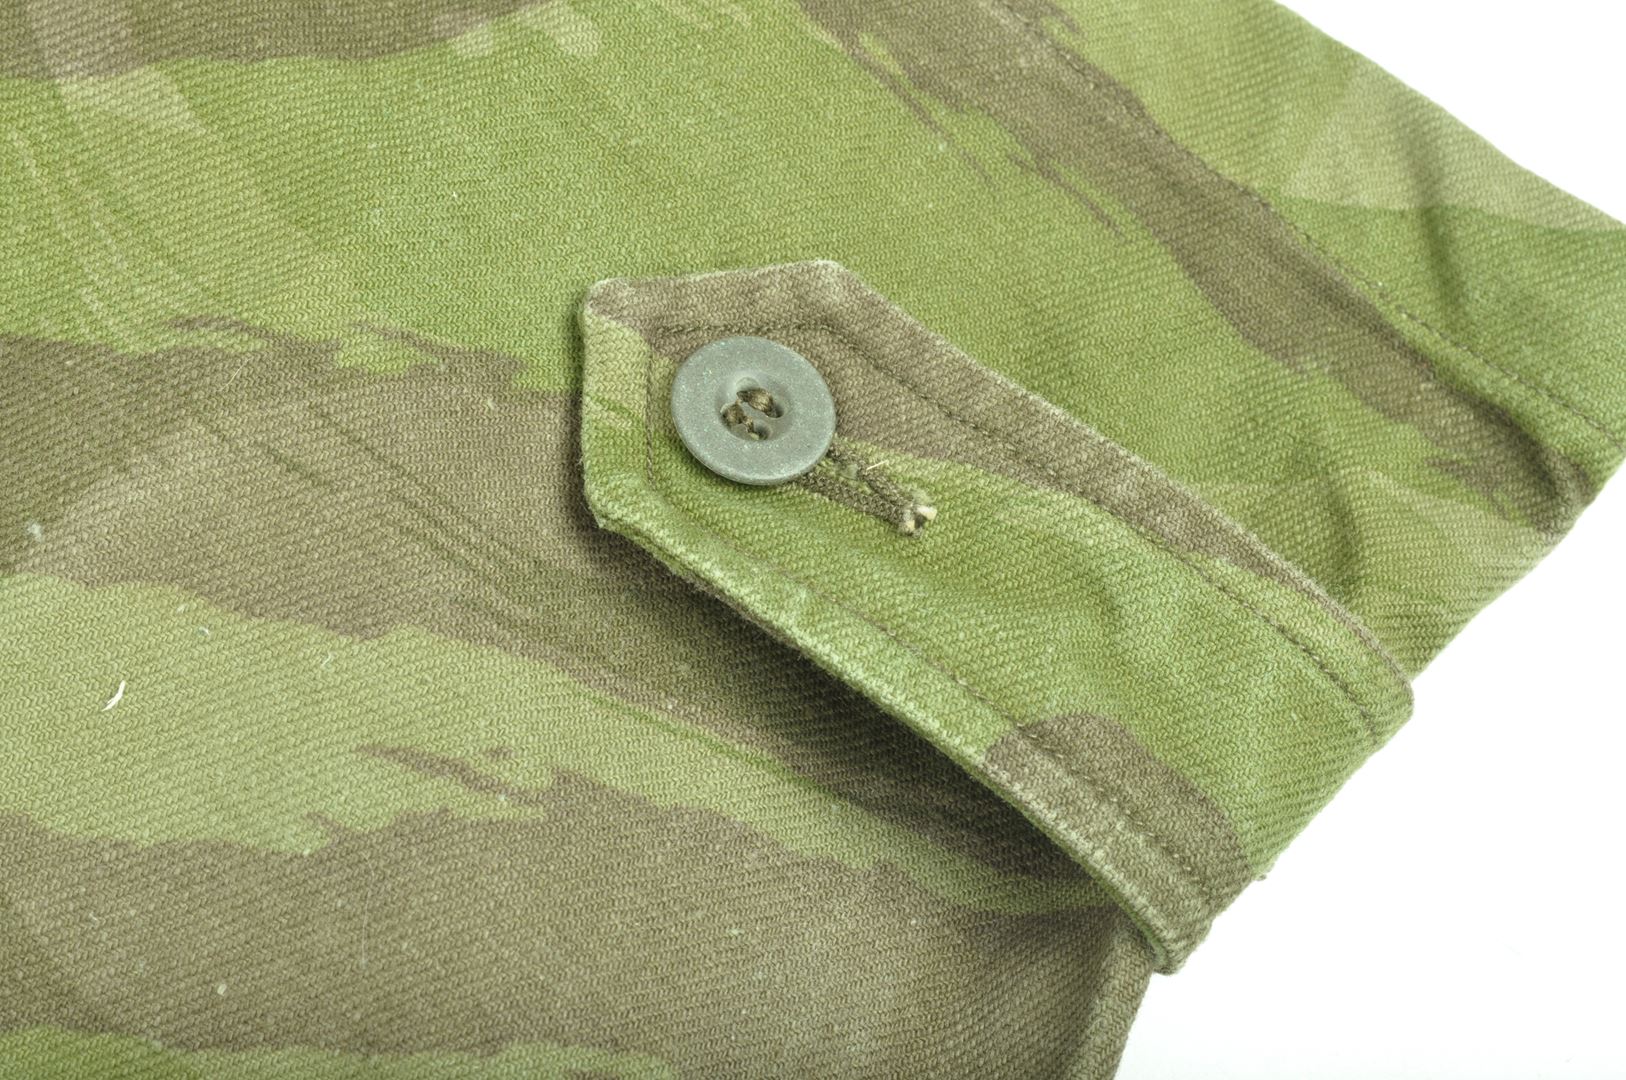 Pantalon TTA 47-53 camouflé